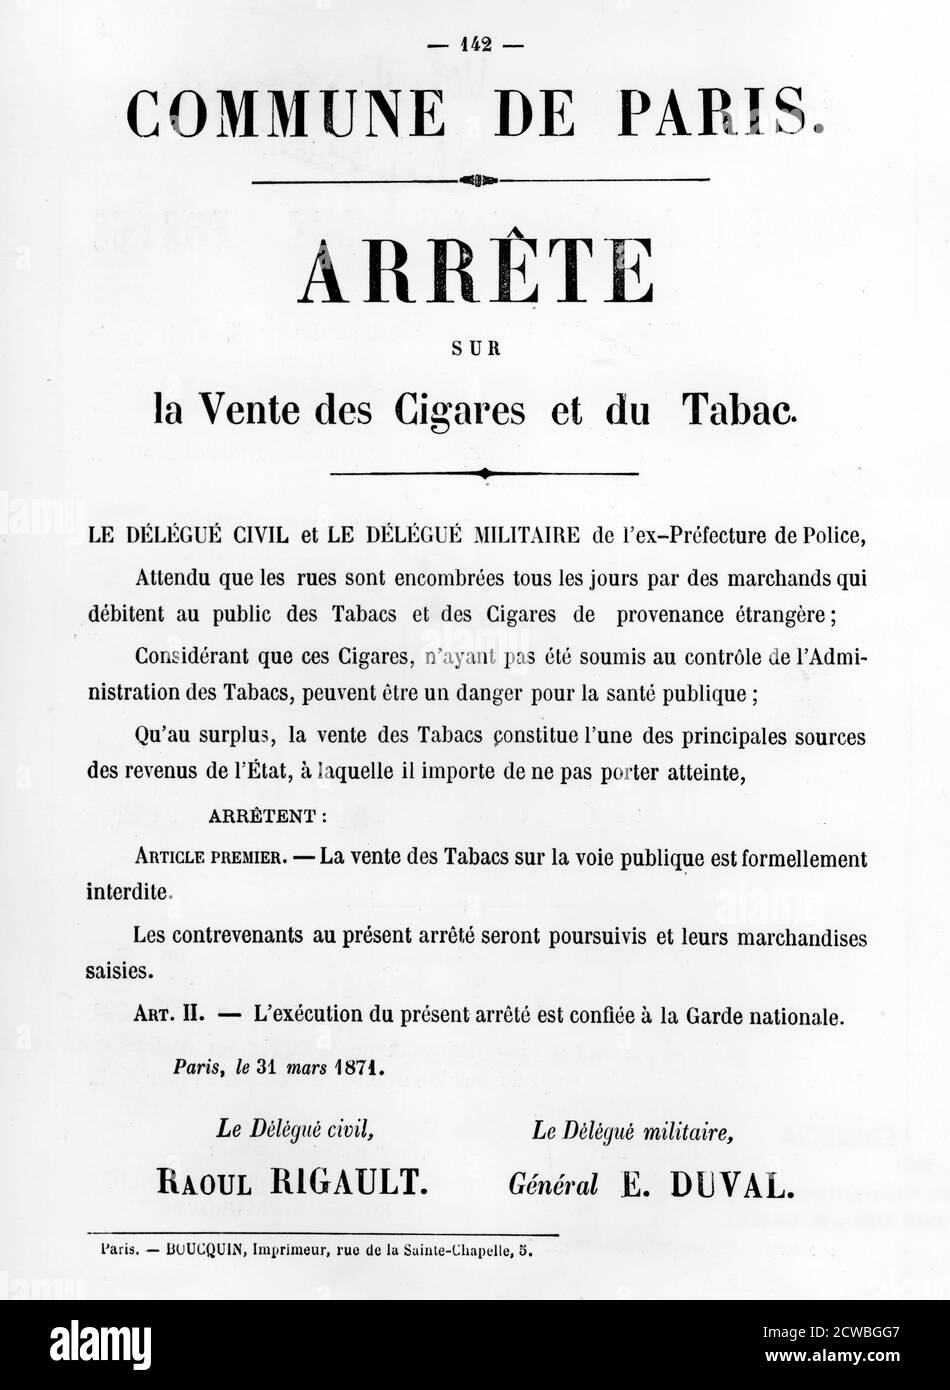 Arrete sur la Vente des Cigares et du Tabac, from French Political posters of the Paris Commune, May 1871. Stock Photo